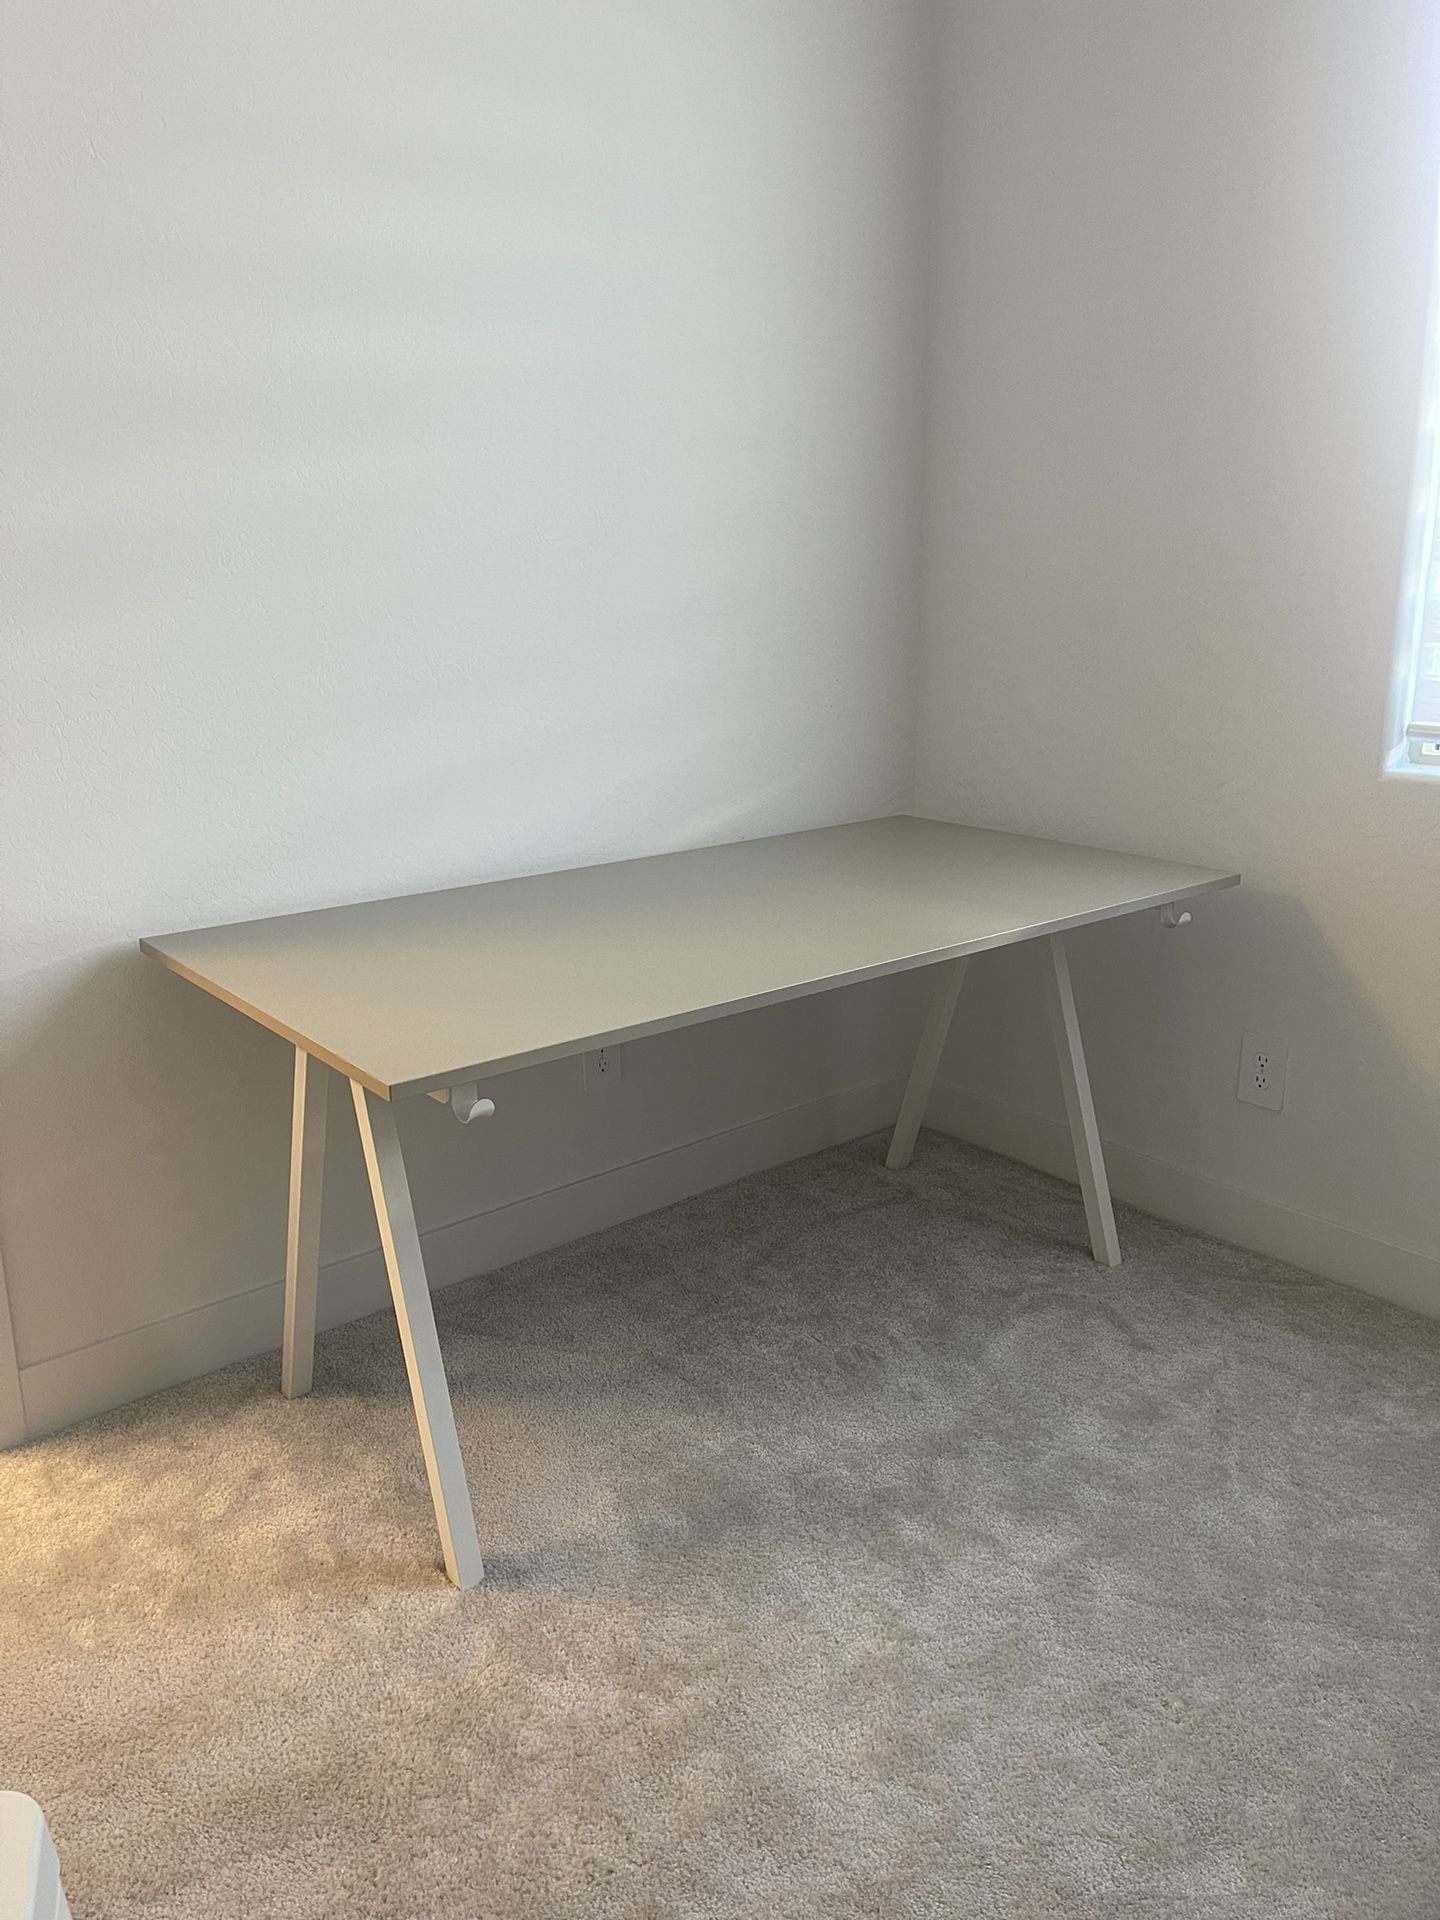 IKEA Trotten Desk 63” x 31 1/2” Beige/White Excellent Condition